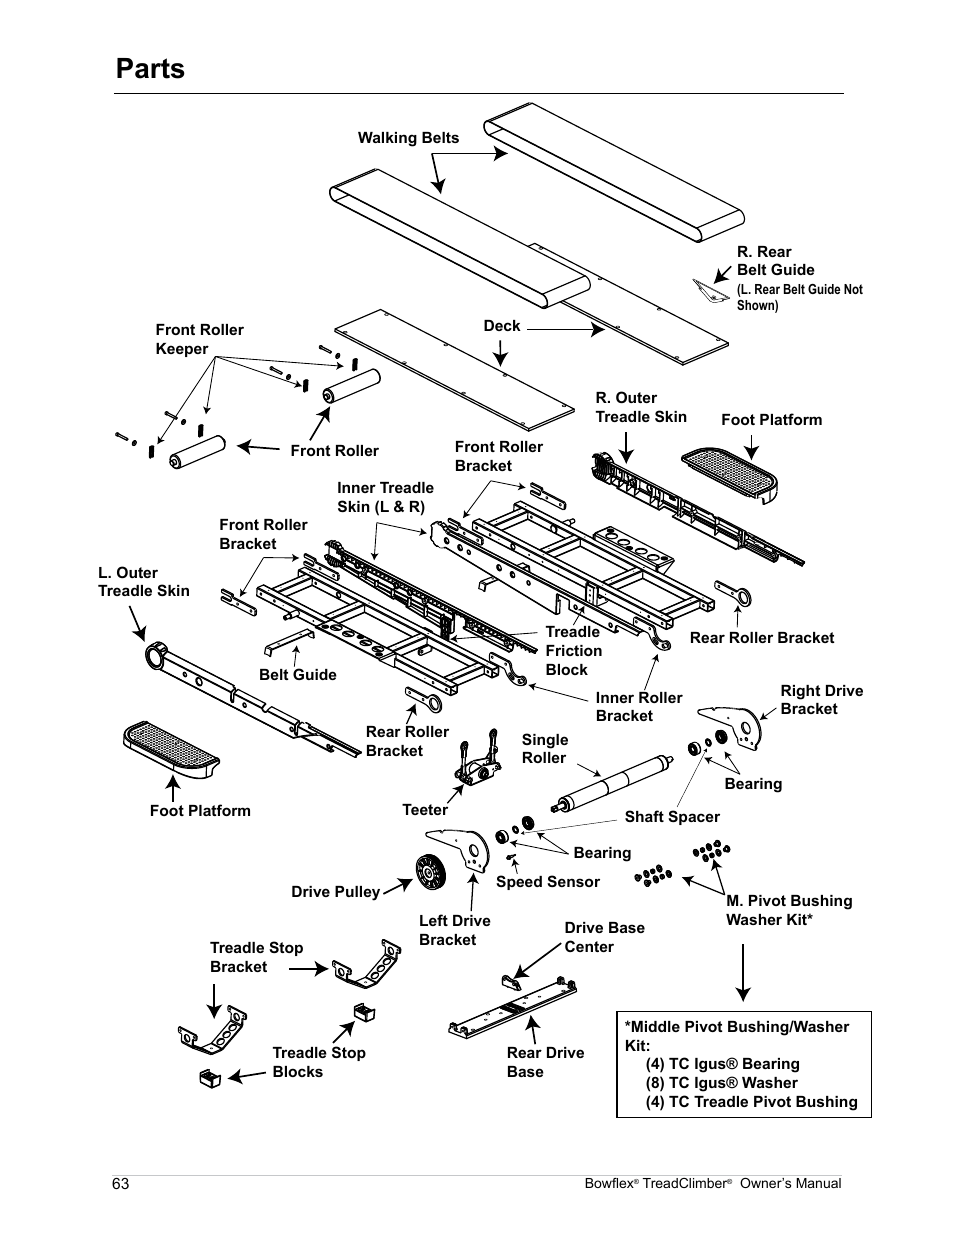 Parts | Bowflex TreadClimber TC5000 User Manual | Page 66 / 69